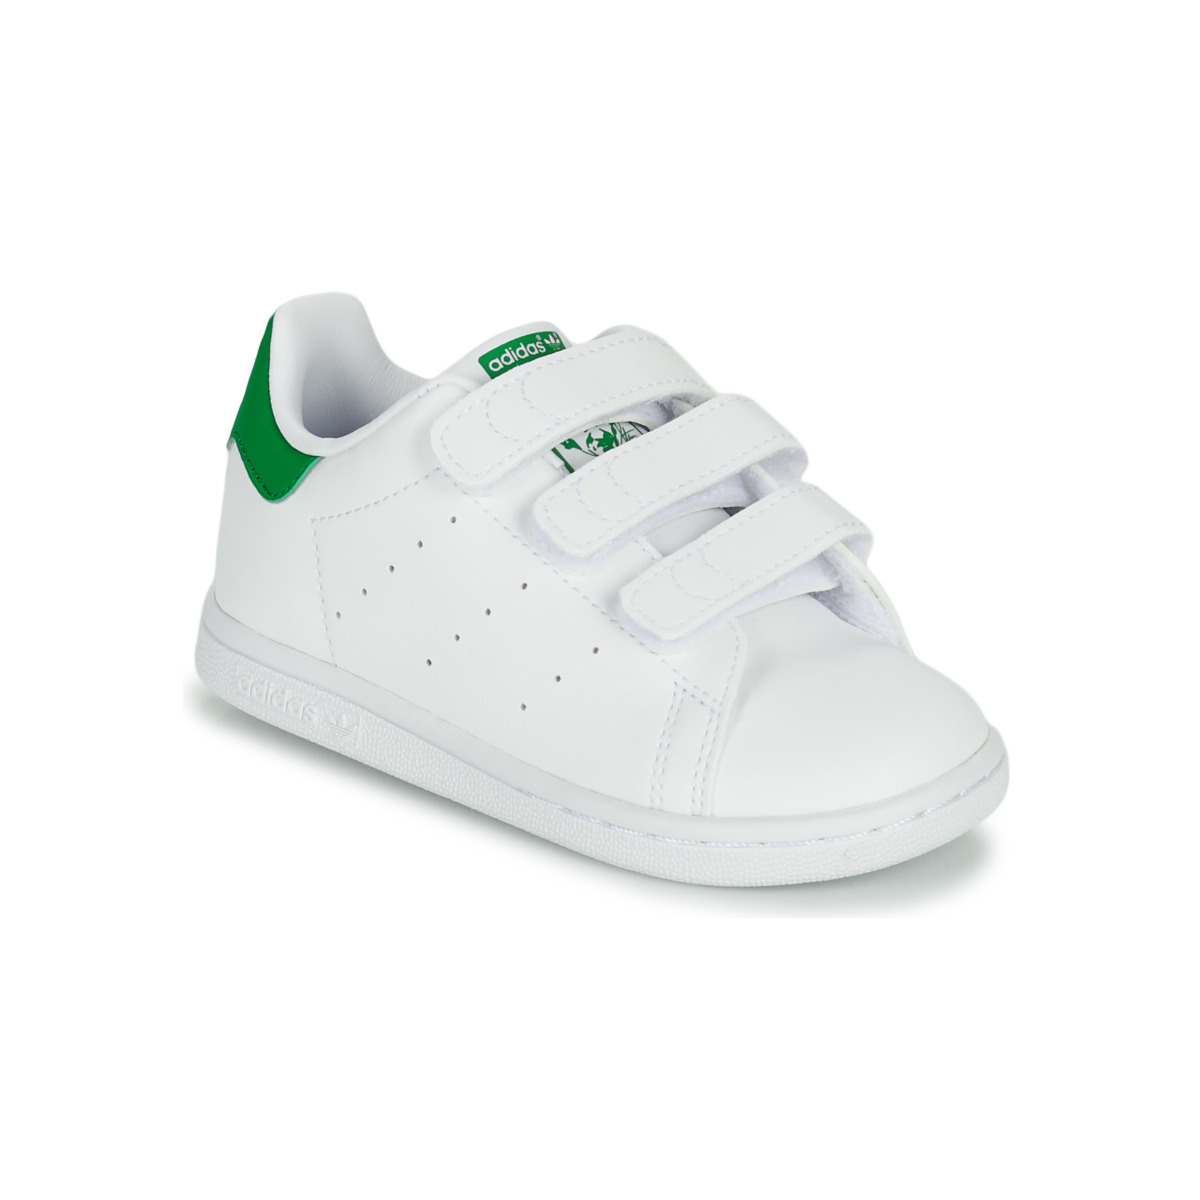 adidas Sneakers - Maat 20 - Unisex - wit - groen